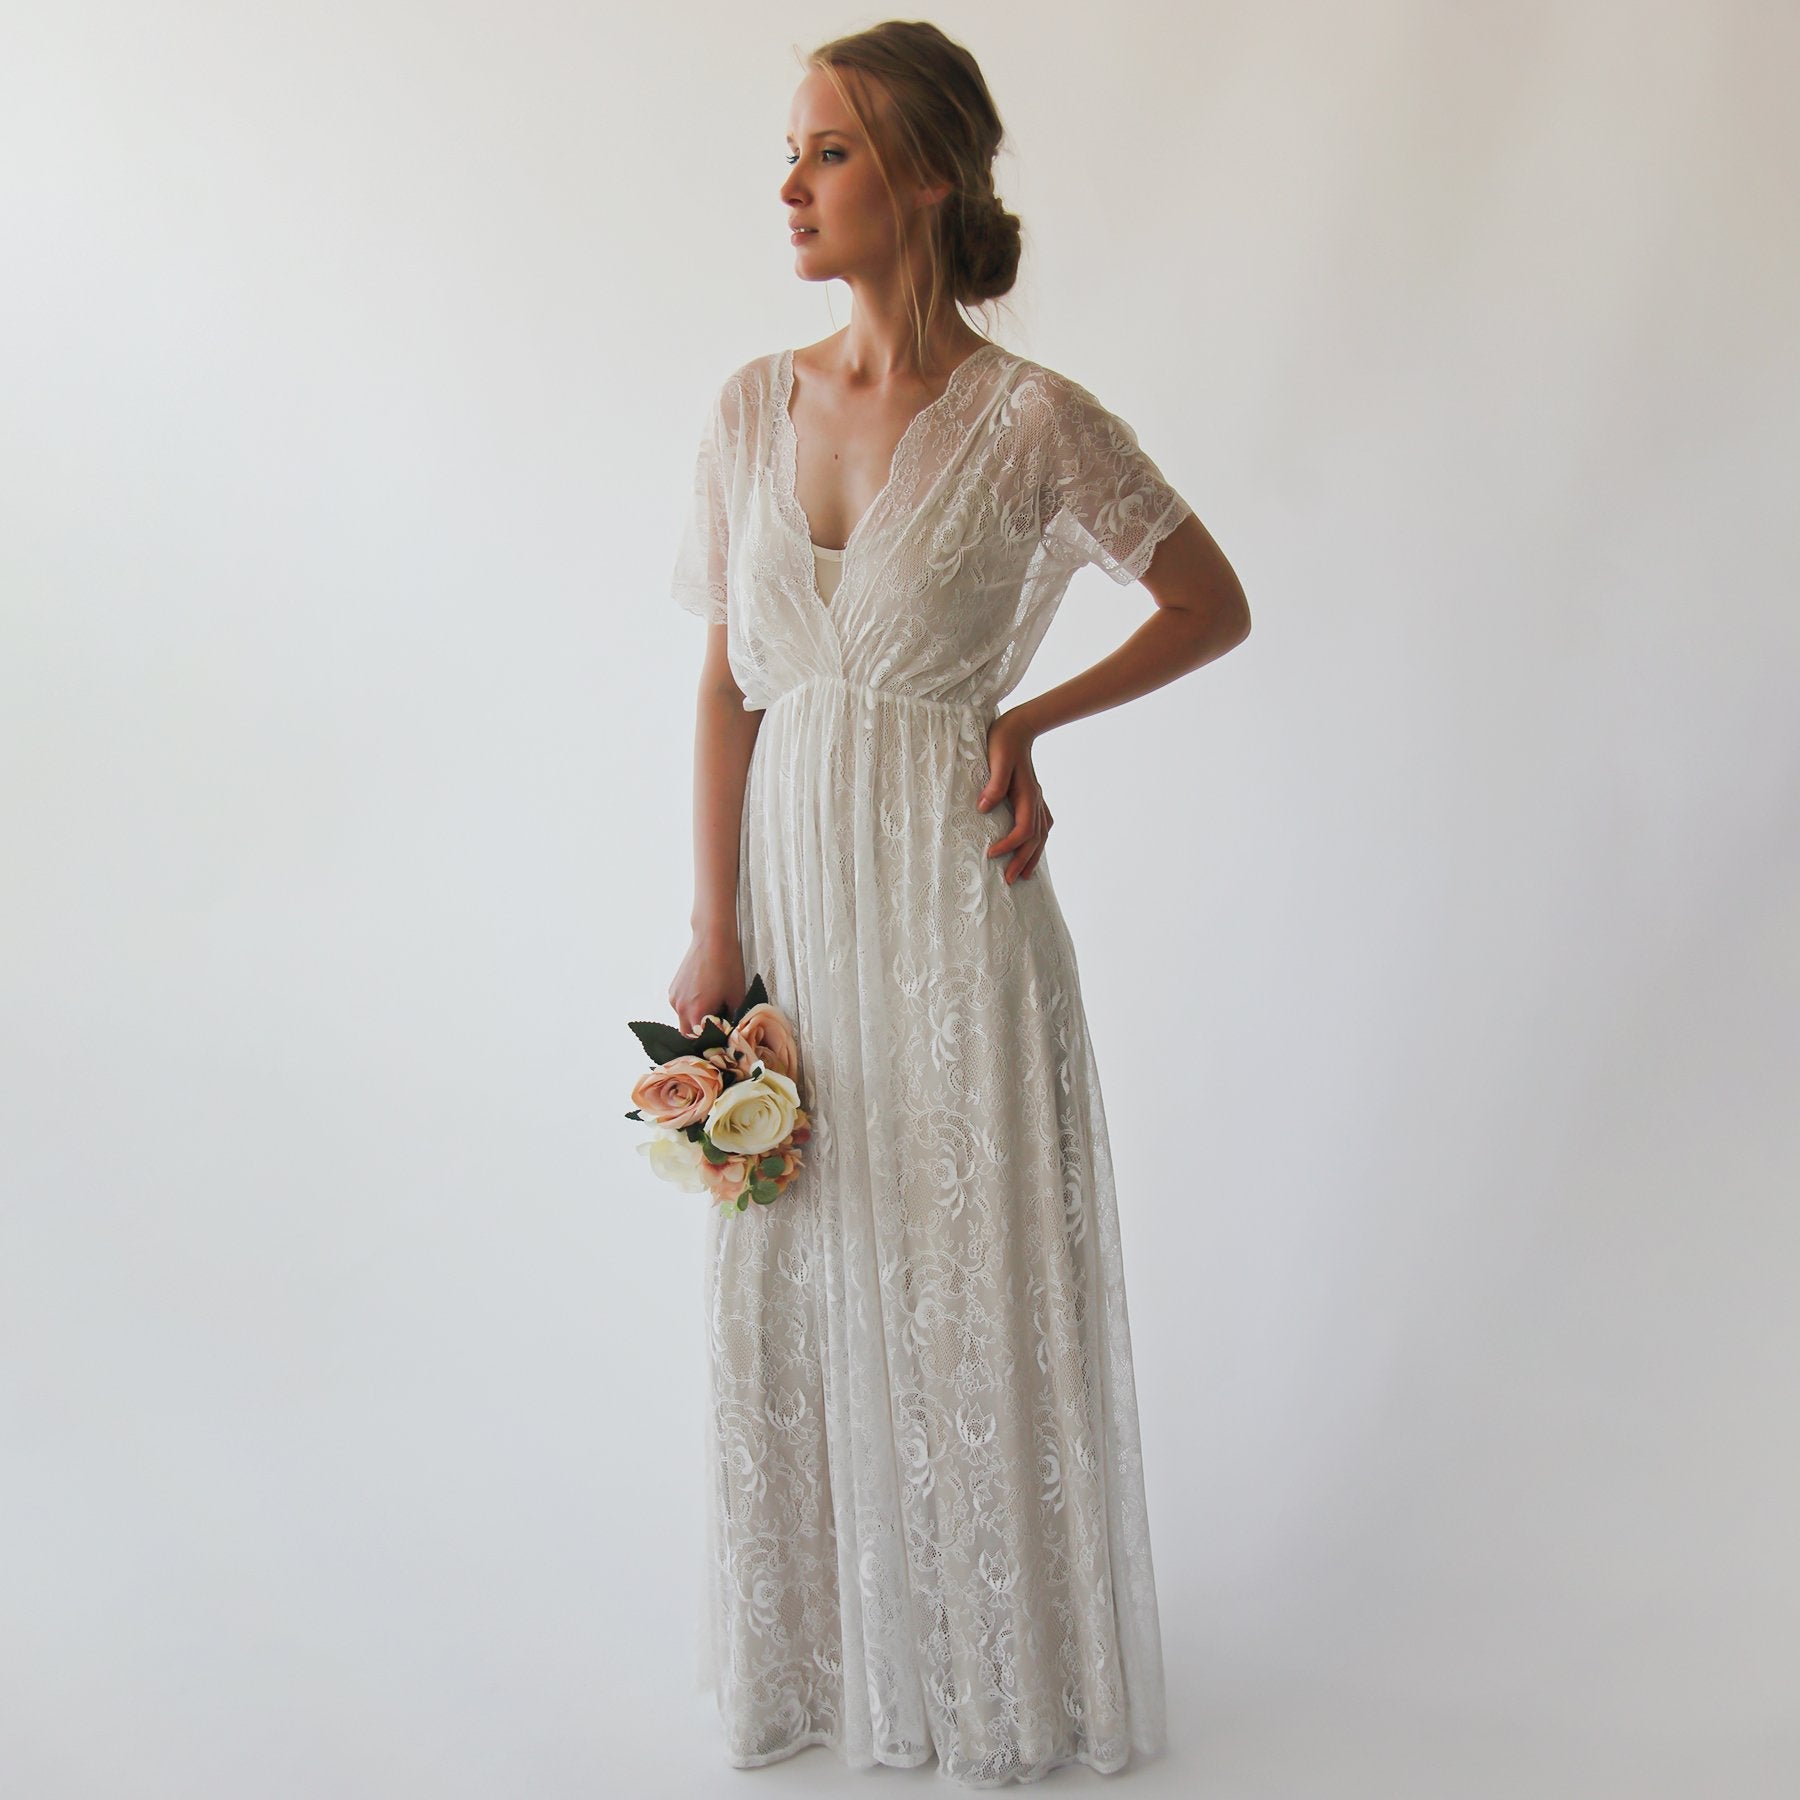 Bohemian Ivory Lace Champagne Lining Bat sleeves Wedding Dress #1044